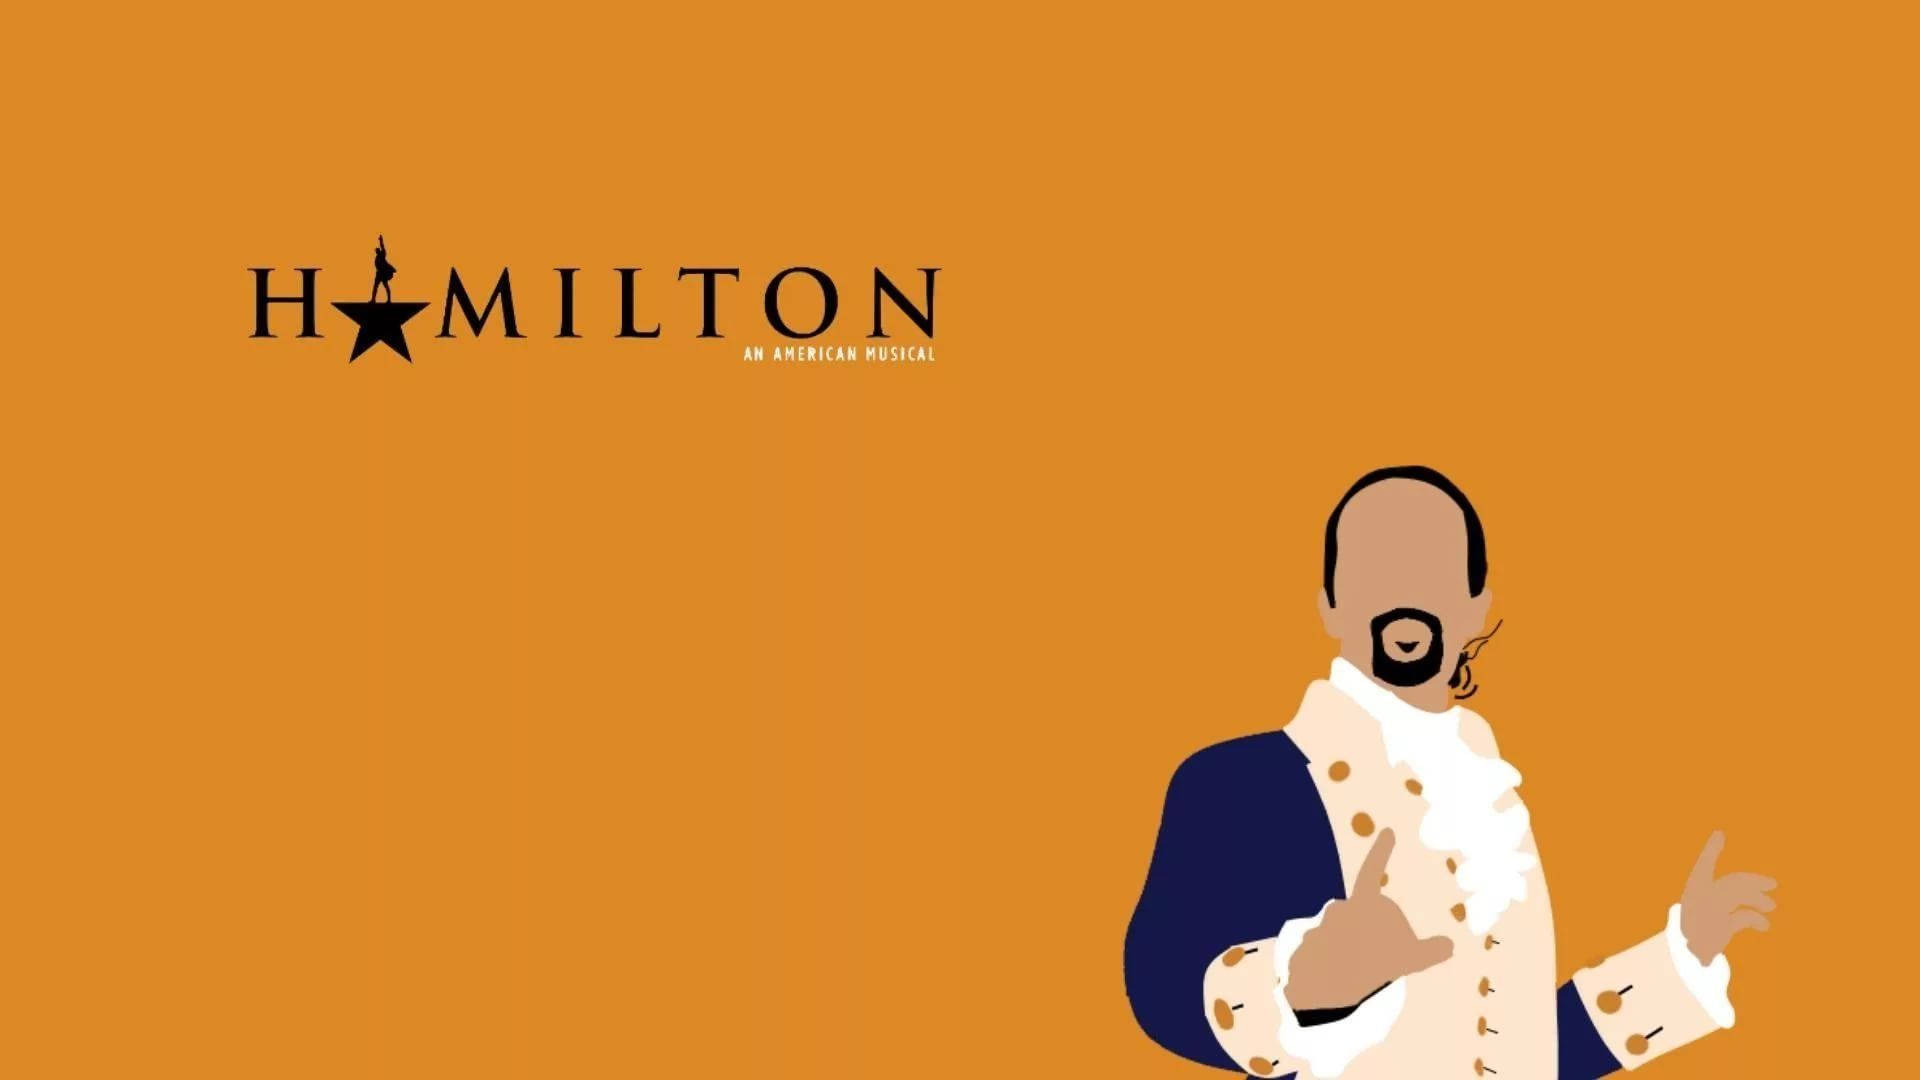 Lin-Manuel Miranda performs the title song “Alexander Hamilton” from the Broadway musical, Hamilton. Wallpaper